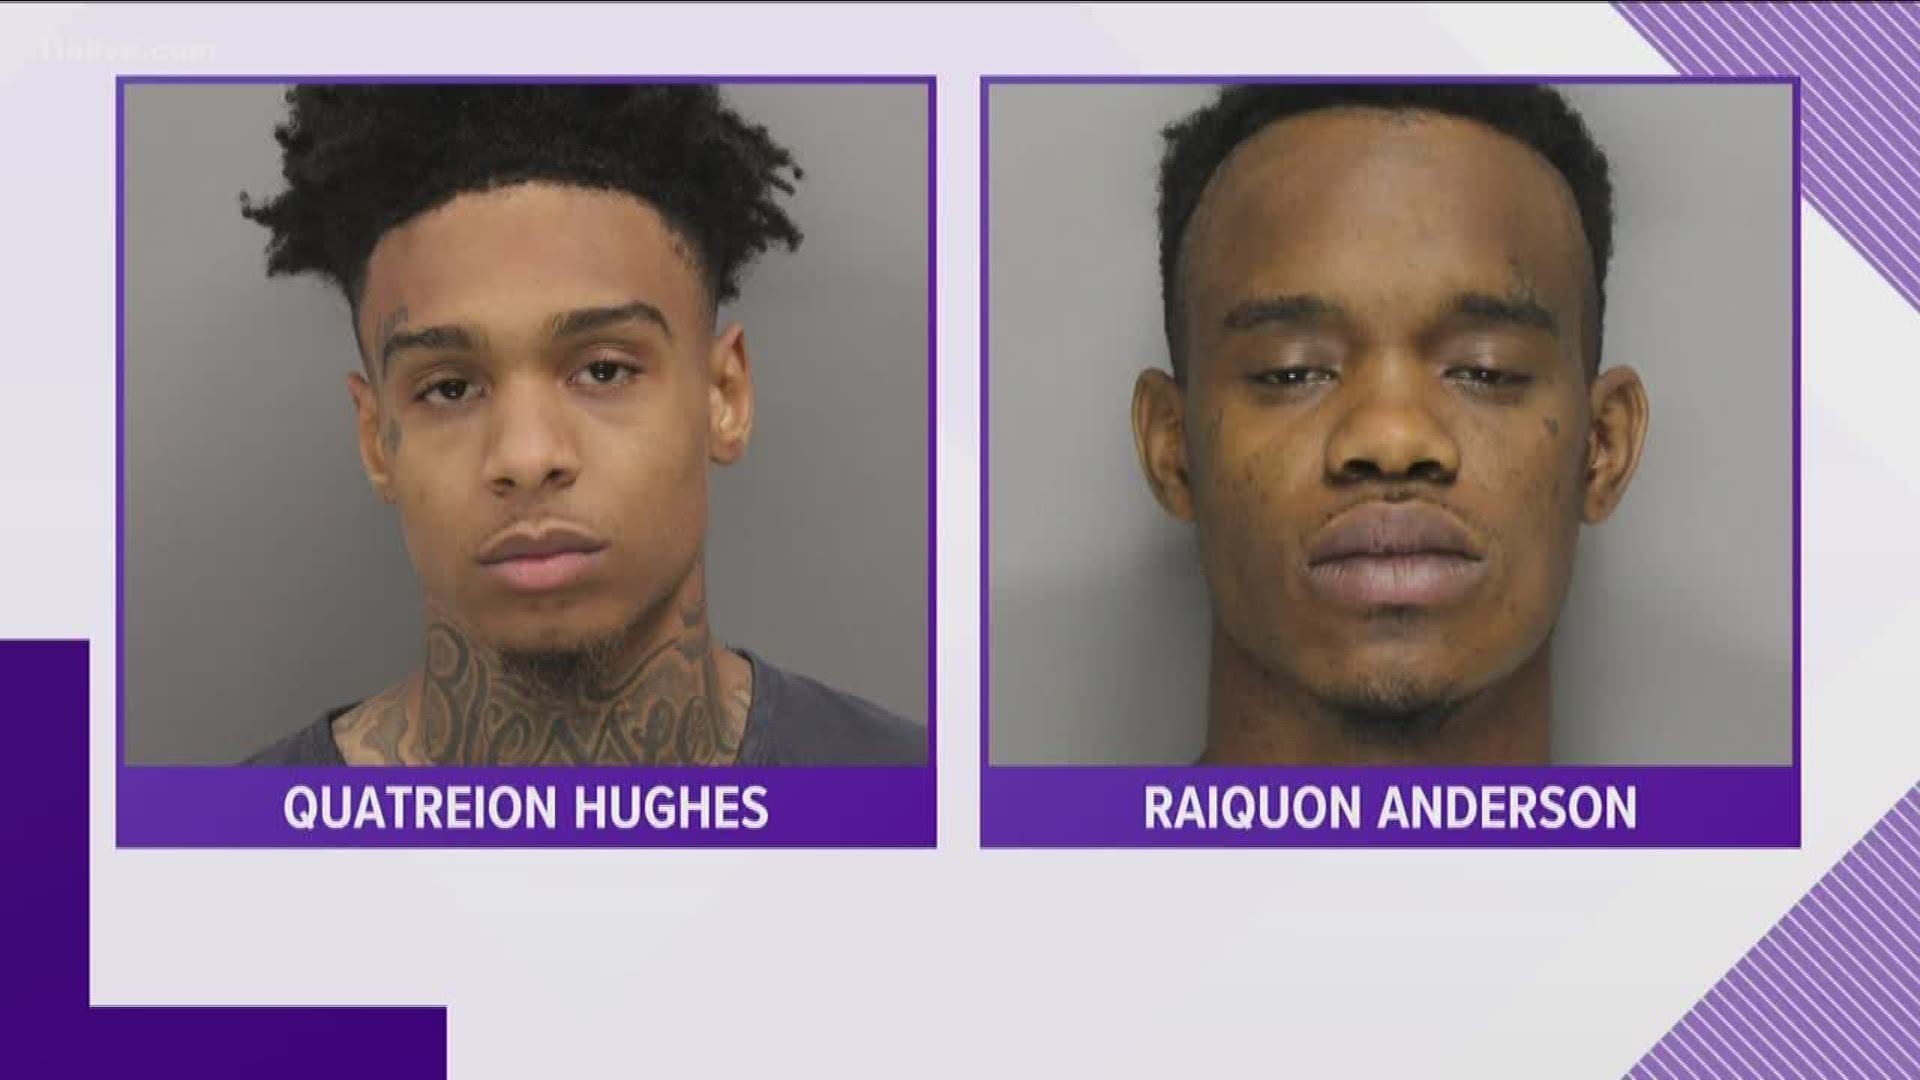 Quatreion Hughes of Toney, Alabama, 19, and Raiquon Anderson, 21, of Huntsville, Alabama were arrested